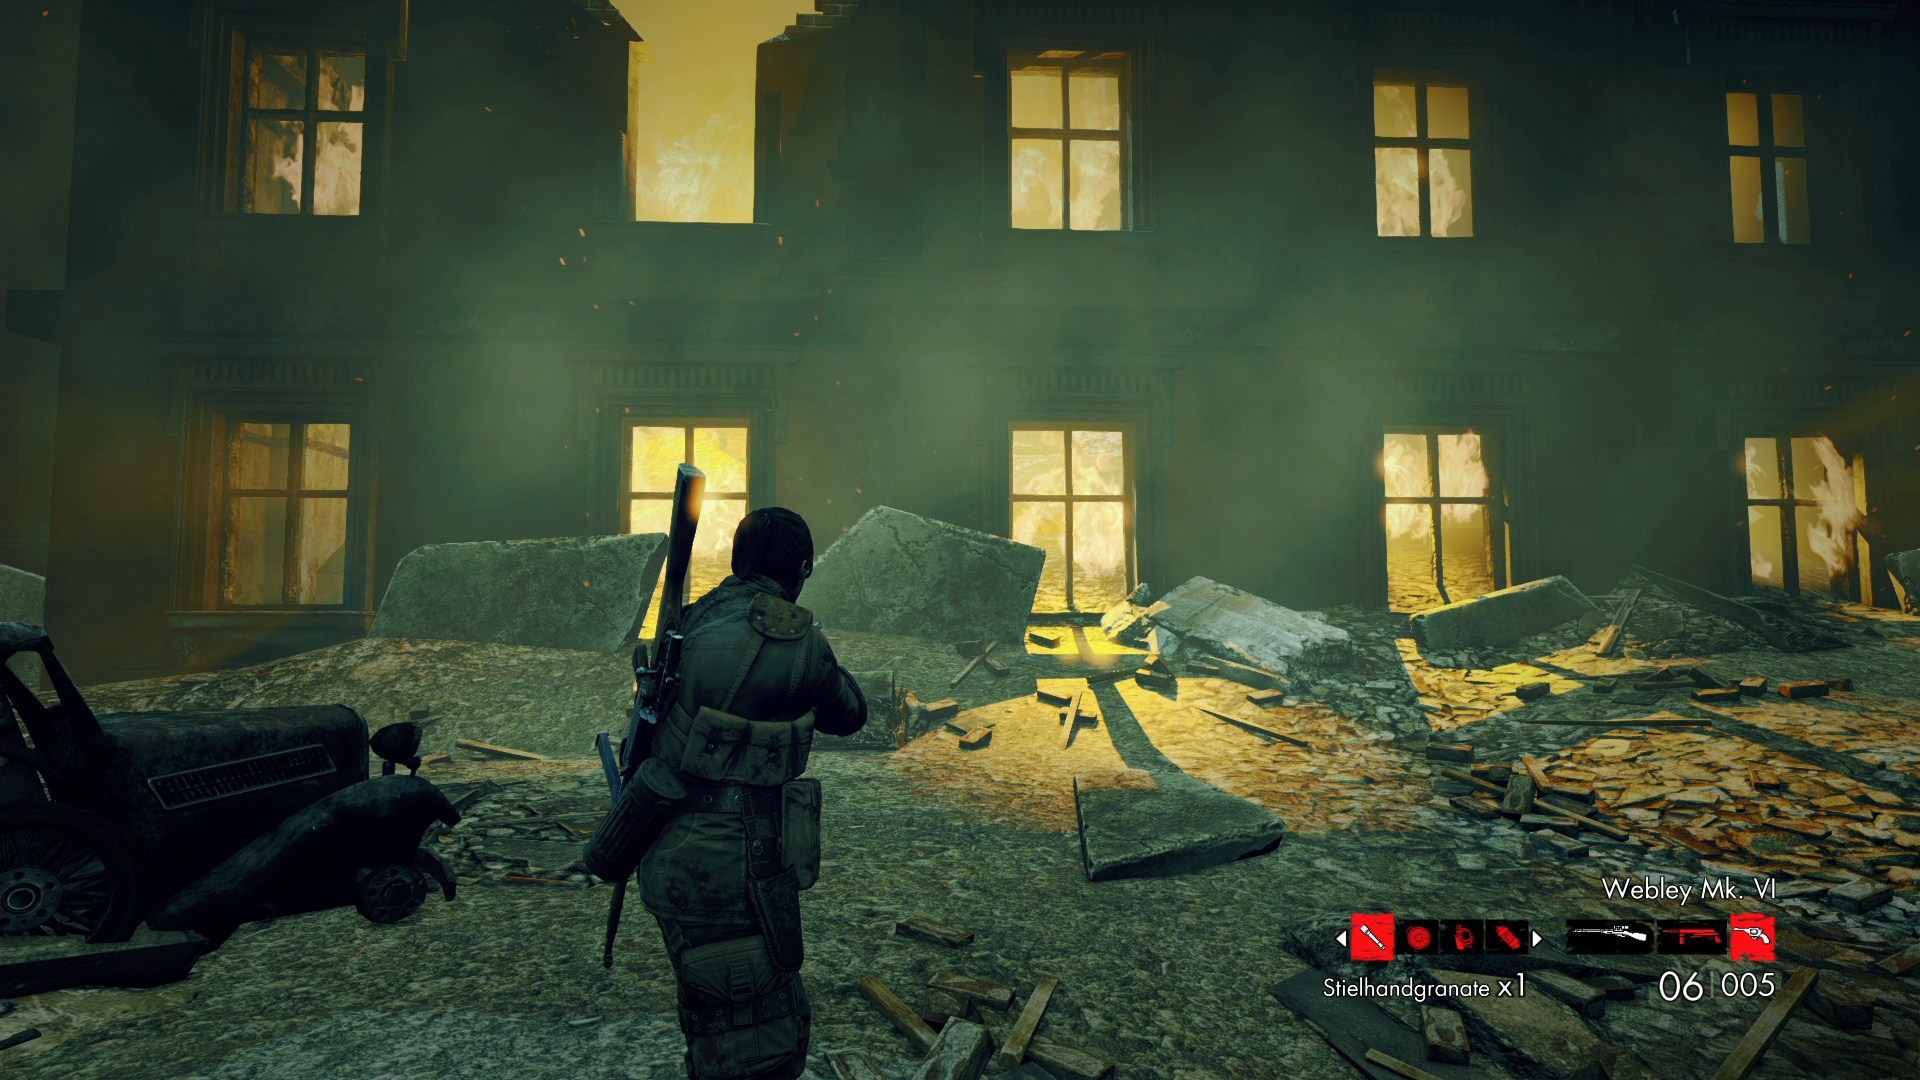 Зомби трилогия игра. Sniper Elite: Zombie Army Trilogy [Nintendo Switch, русская версия].